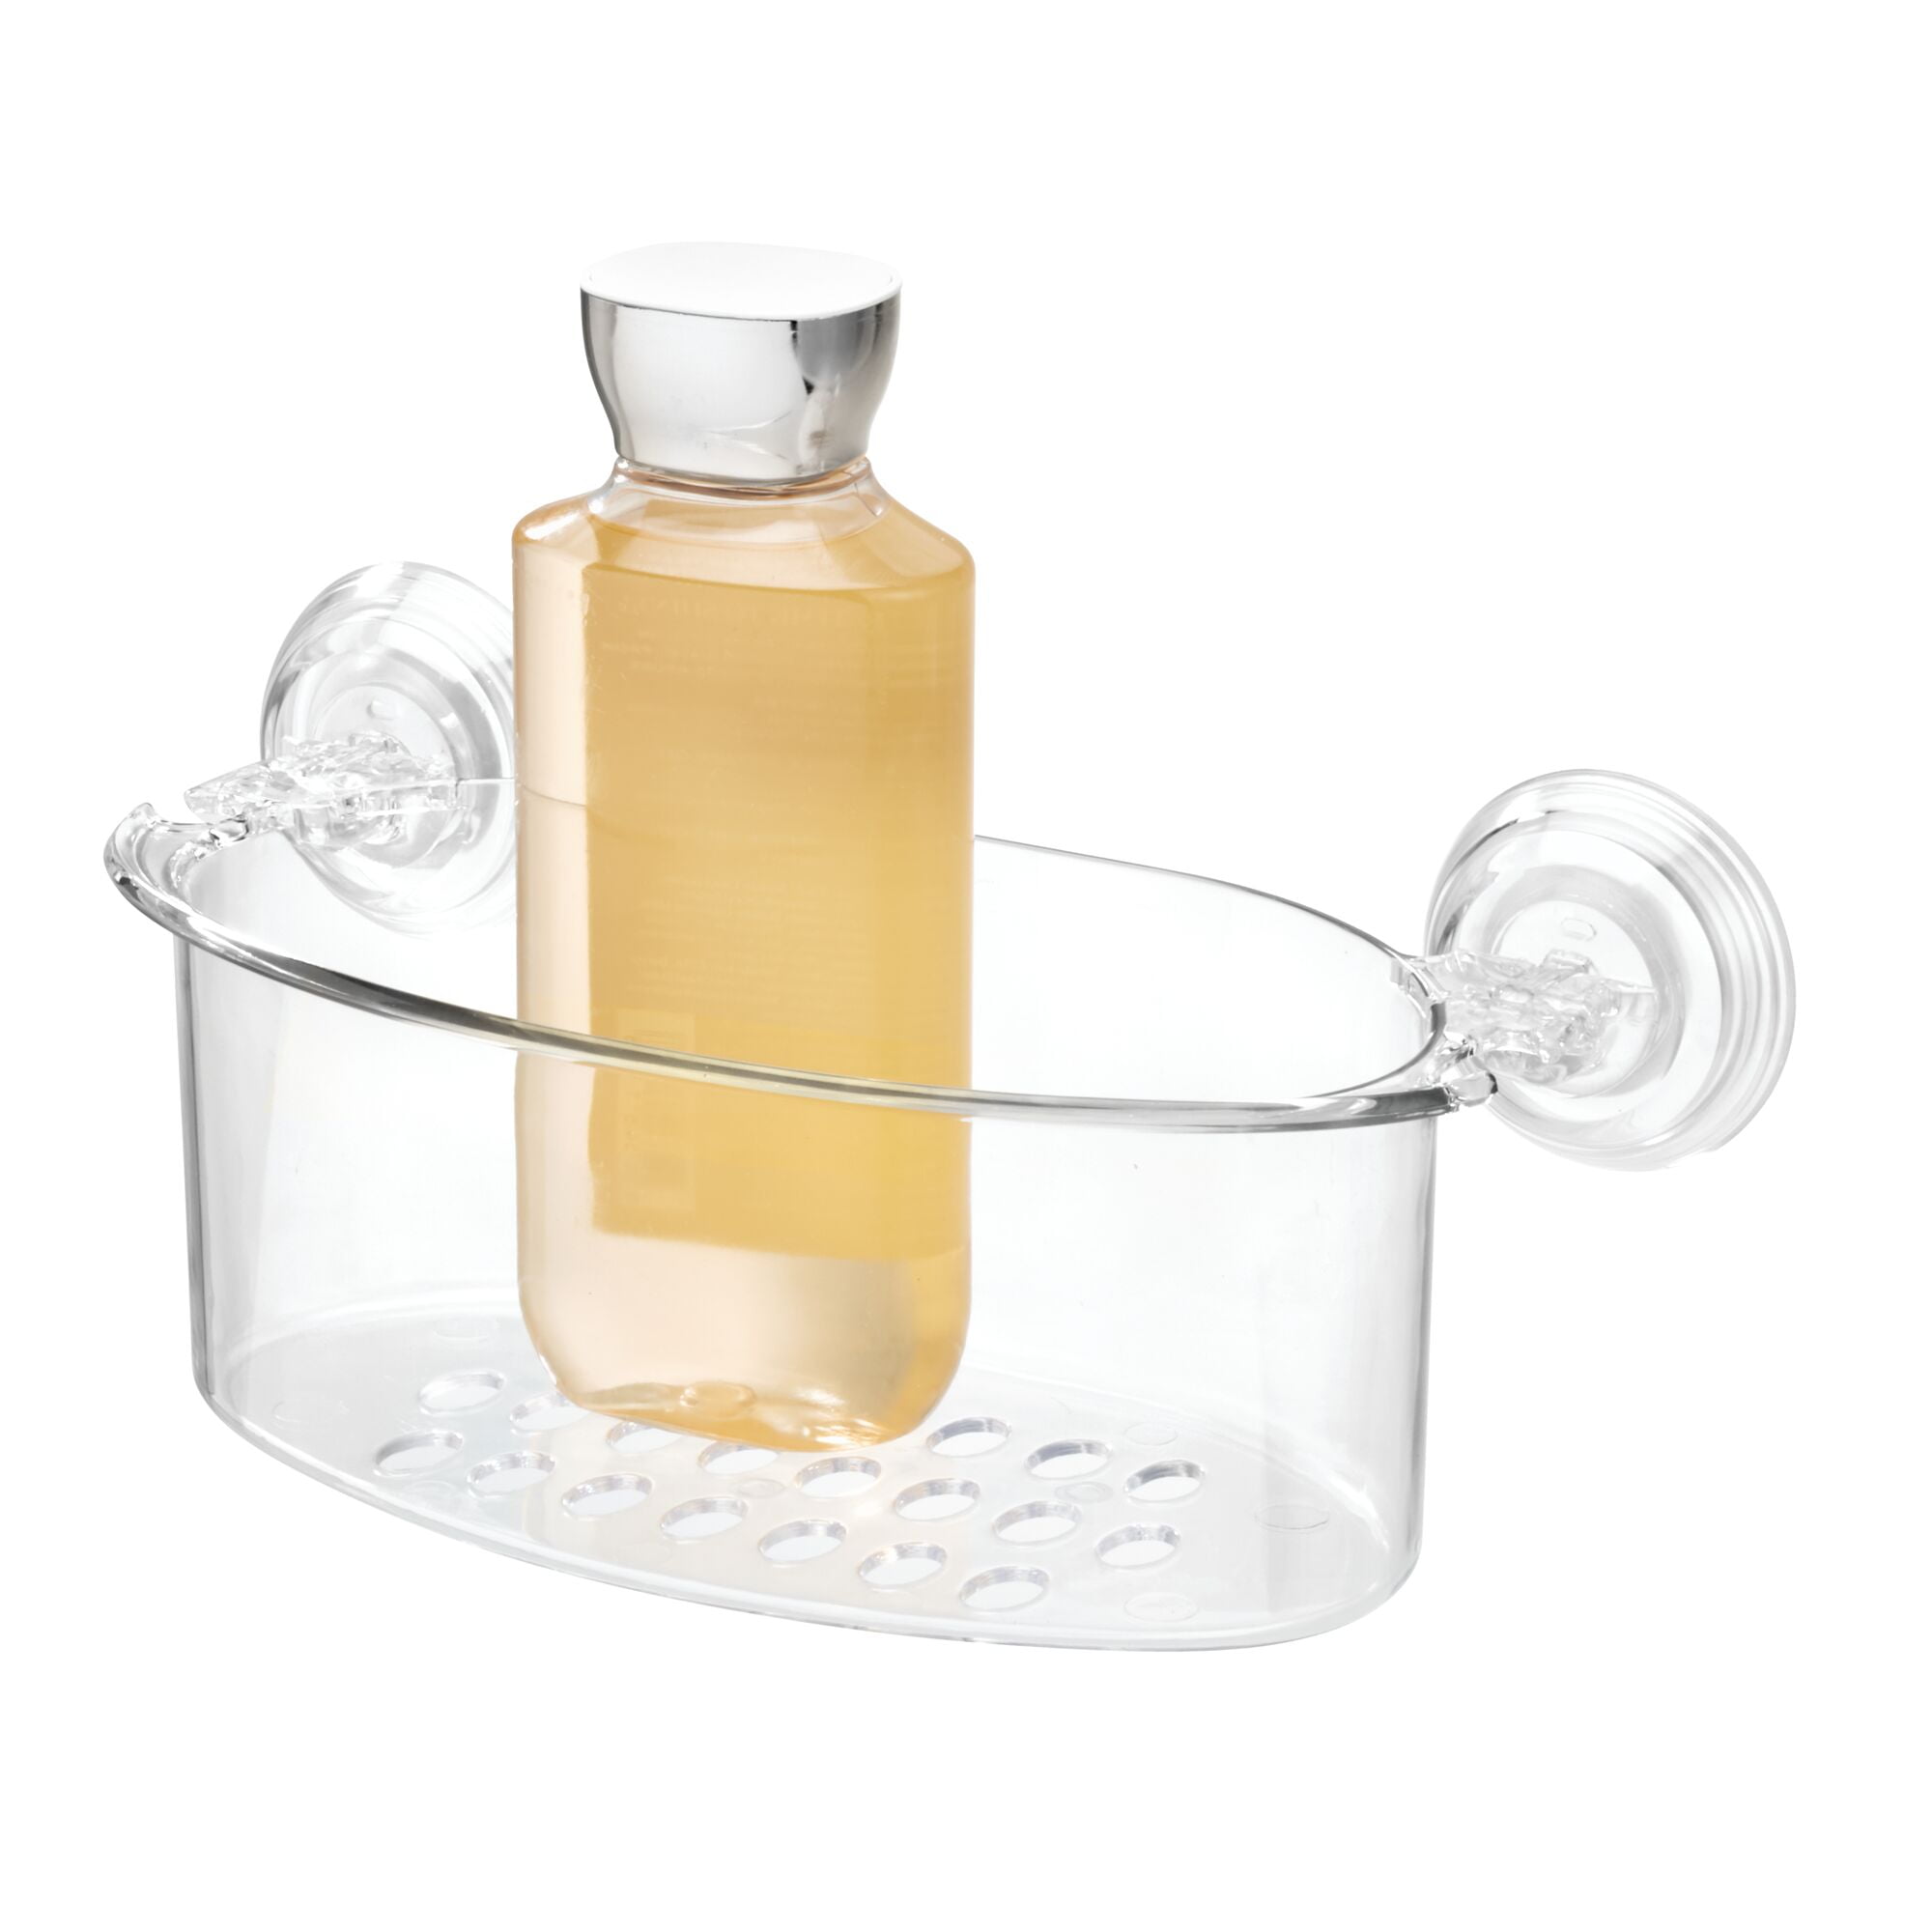 iDesign Plastic Bathroom Suction Holder, Shower Organizer Corner Basket for  Sponges, Scrubbers, Soap, Shampoo, Conditioner, 9 x 7 x 3.5, Clear 